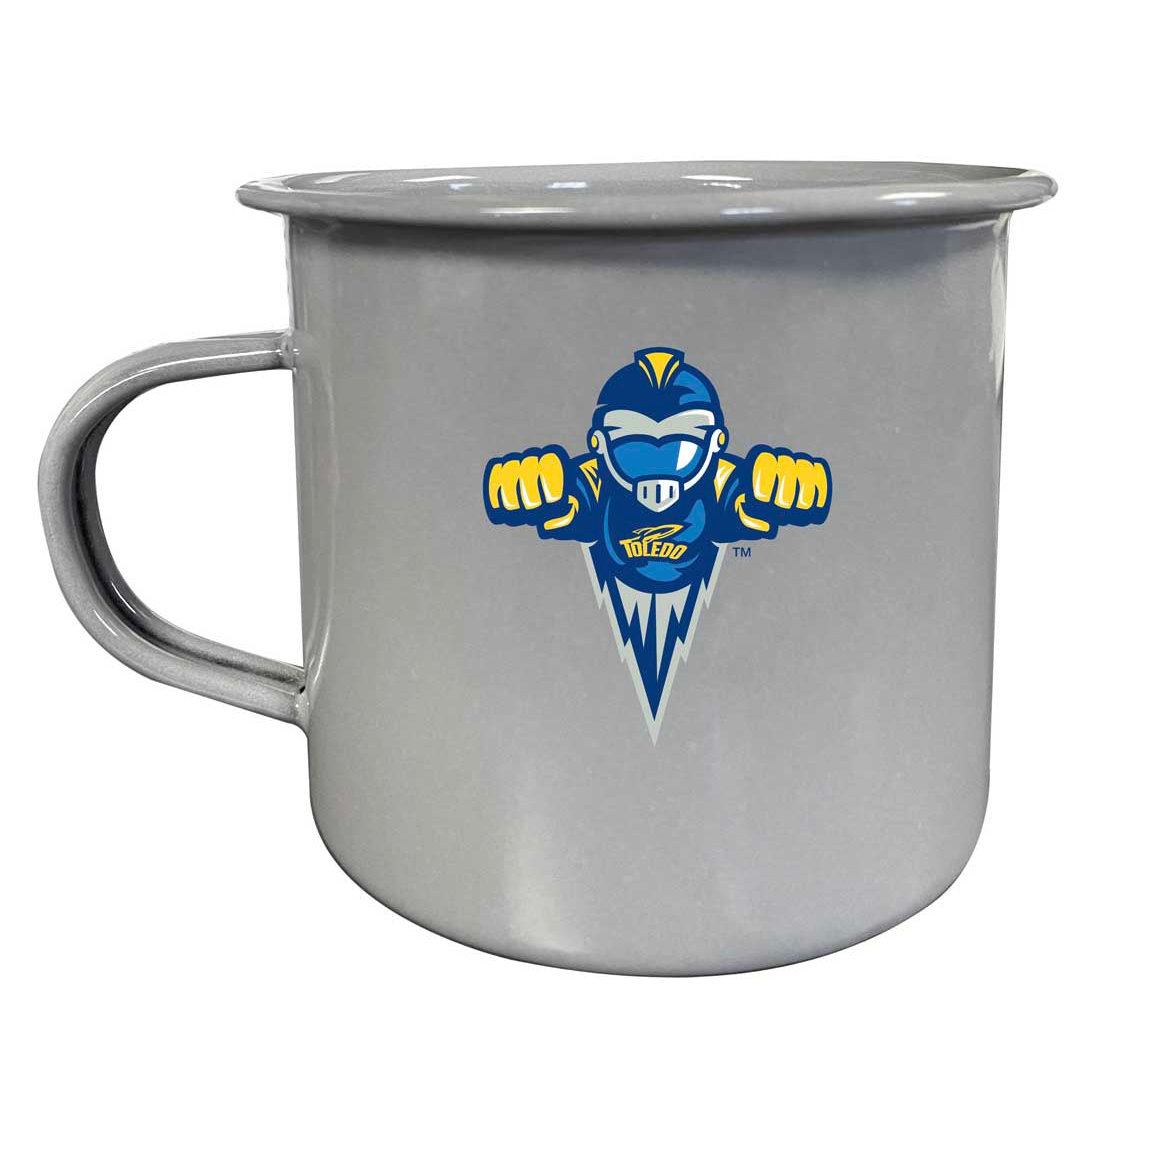 Toledo Rockets Tin Camper Coffee Mug - Choose Your Color - Gray